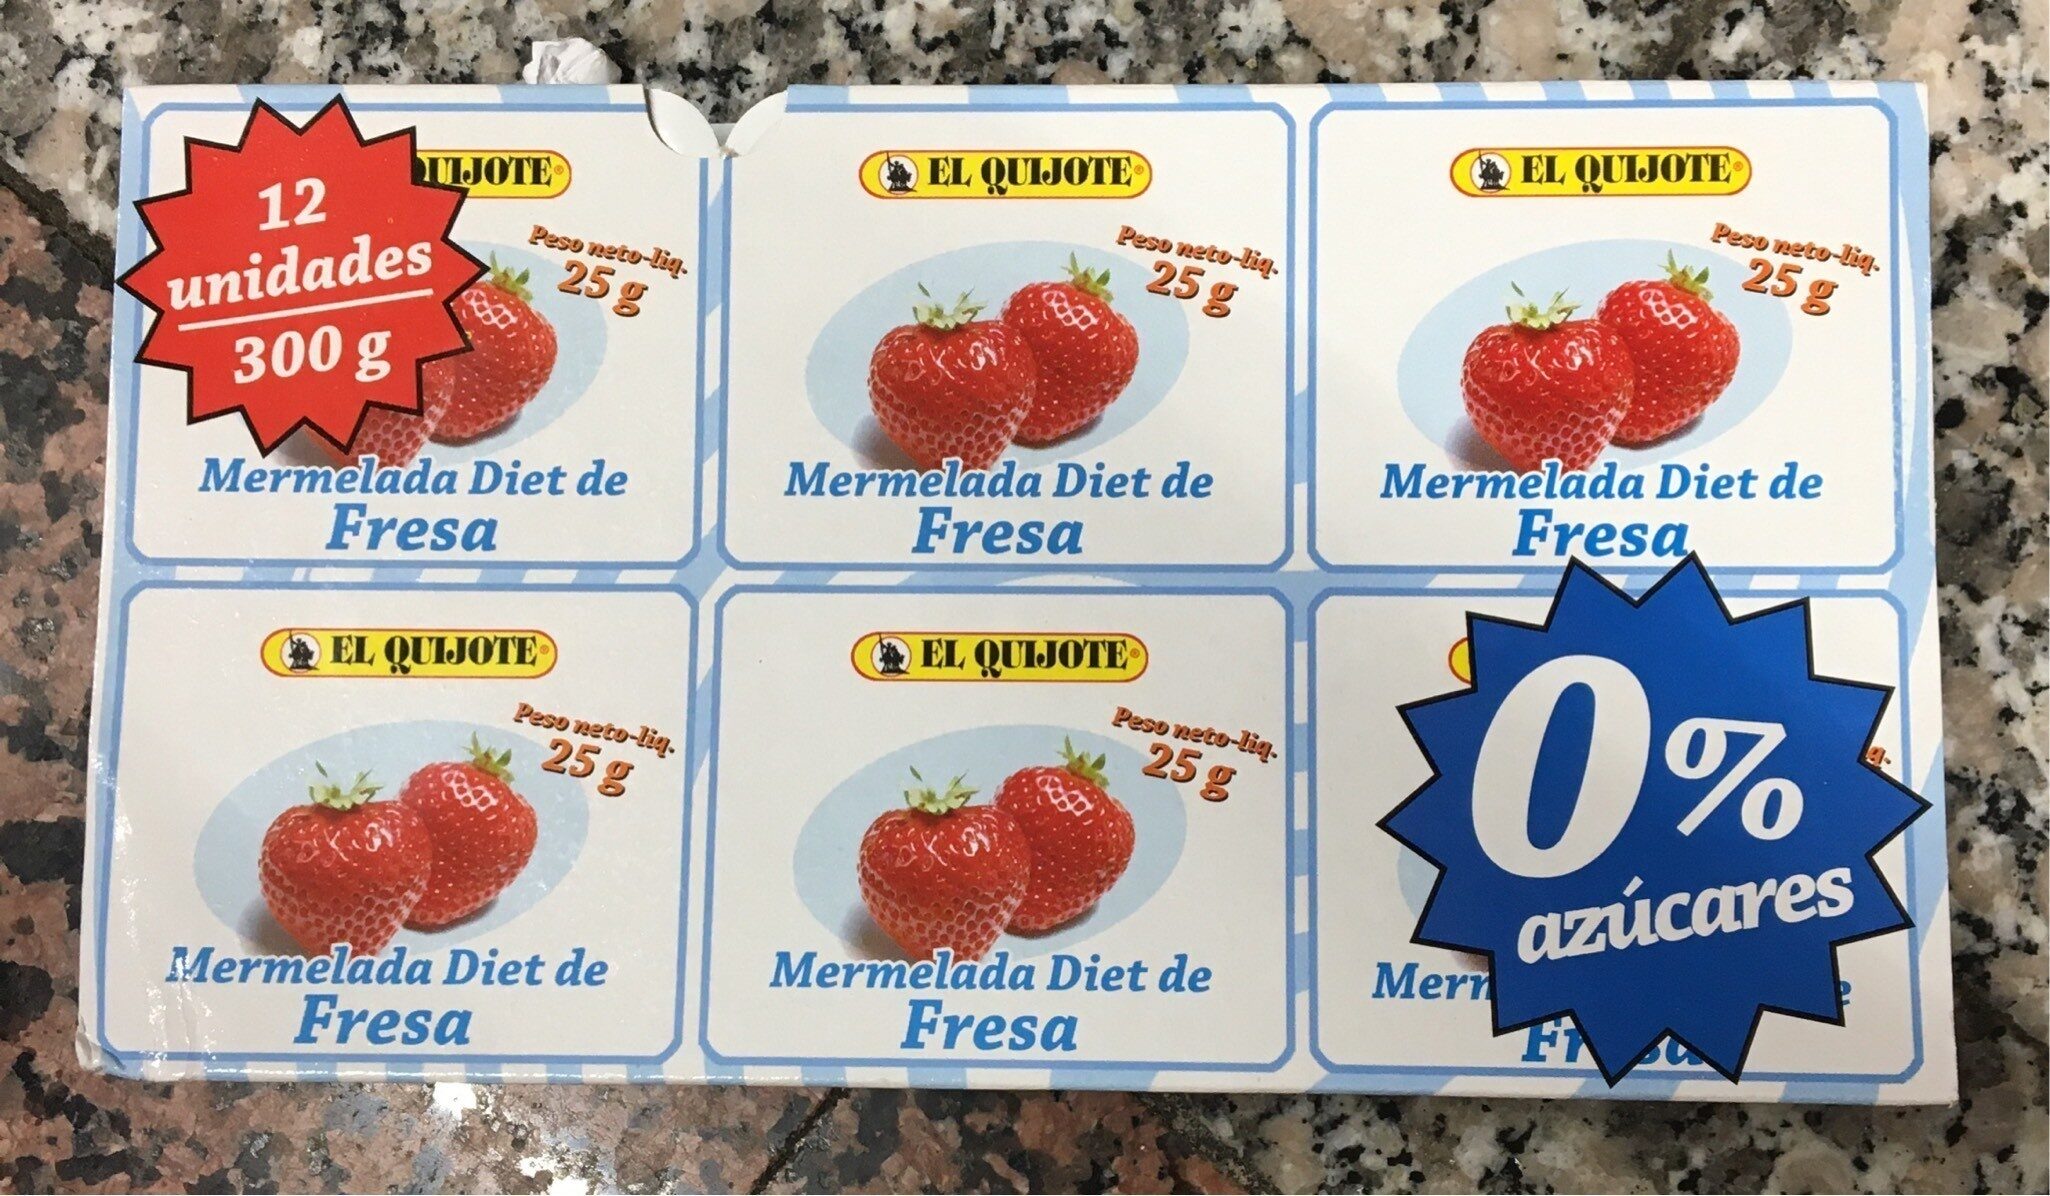 Mermelada fresa diet - Product - es